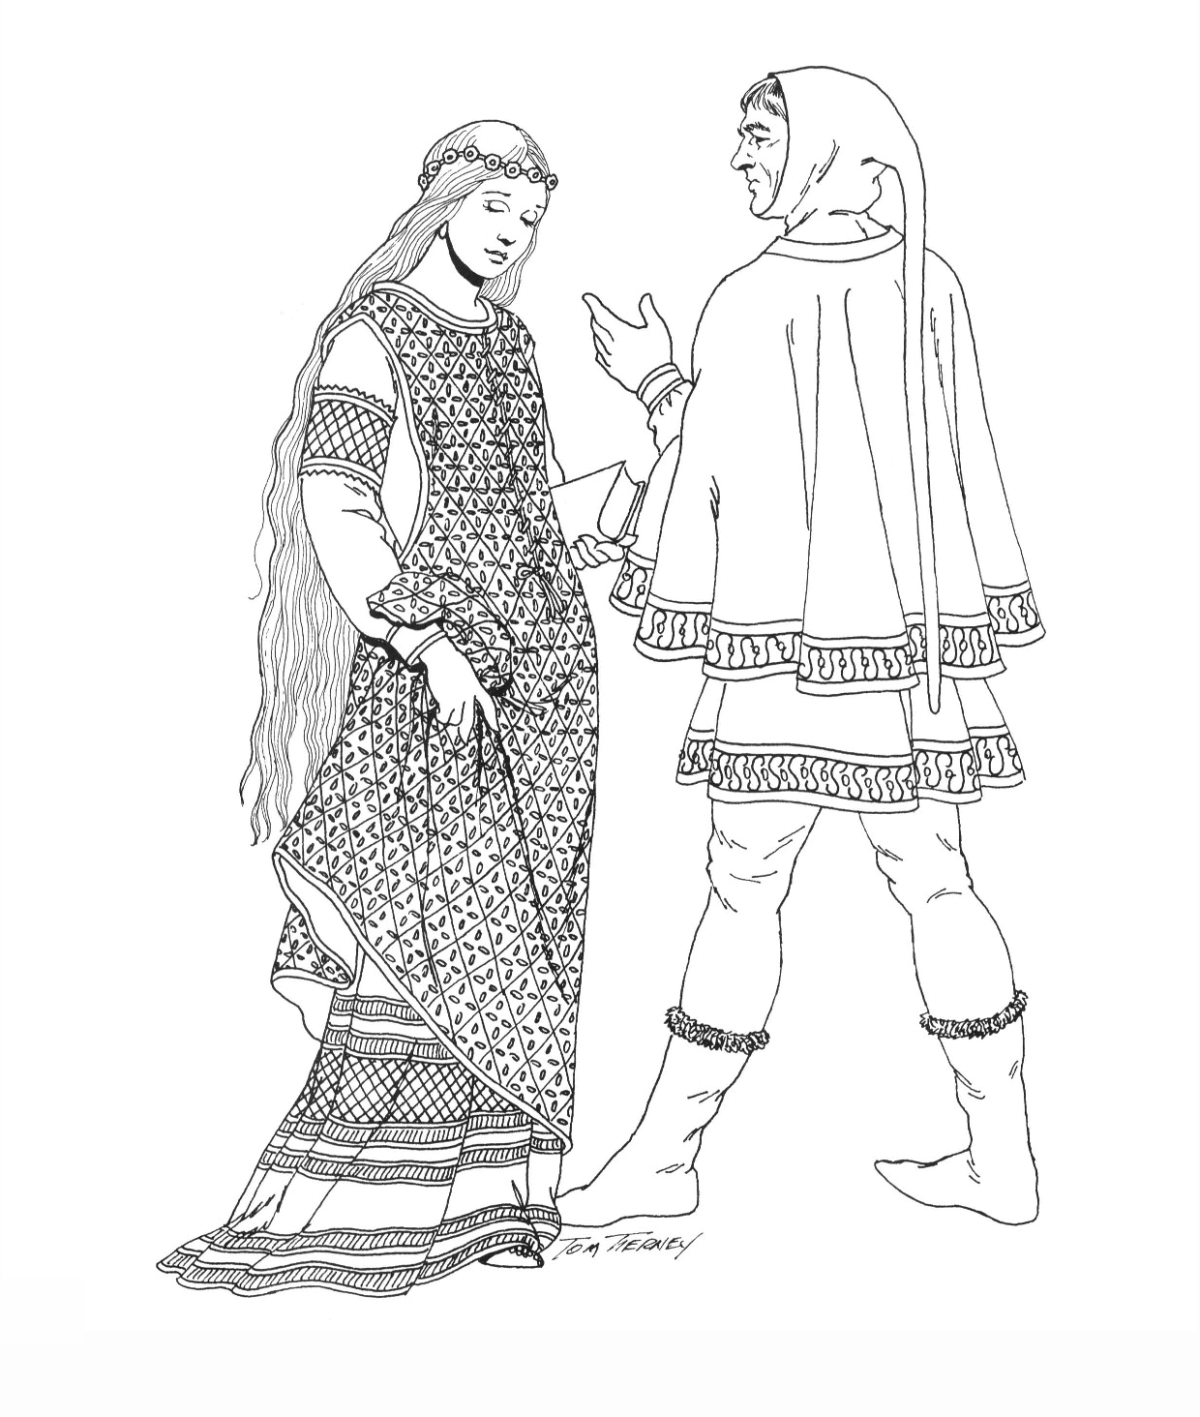 Раскраска костюмы. Средневековый костюм раскраска. Средневековый костюм рисунок. Раскраска в исторических нарядах. Раскраска средневековье.